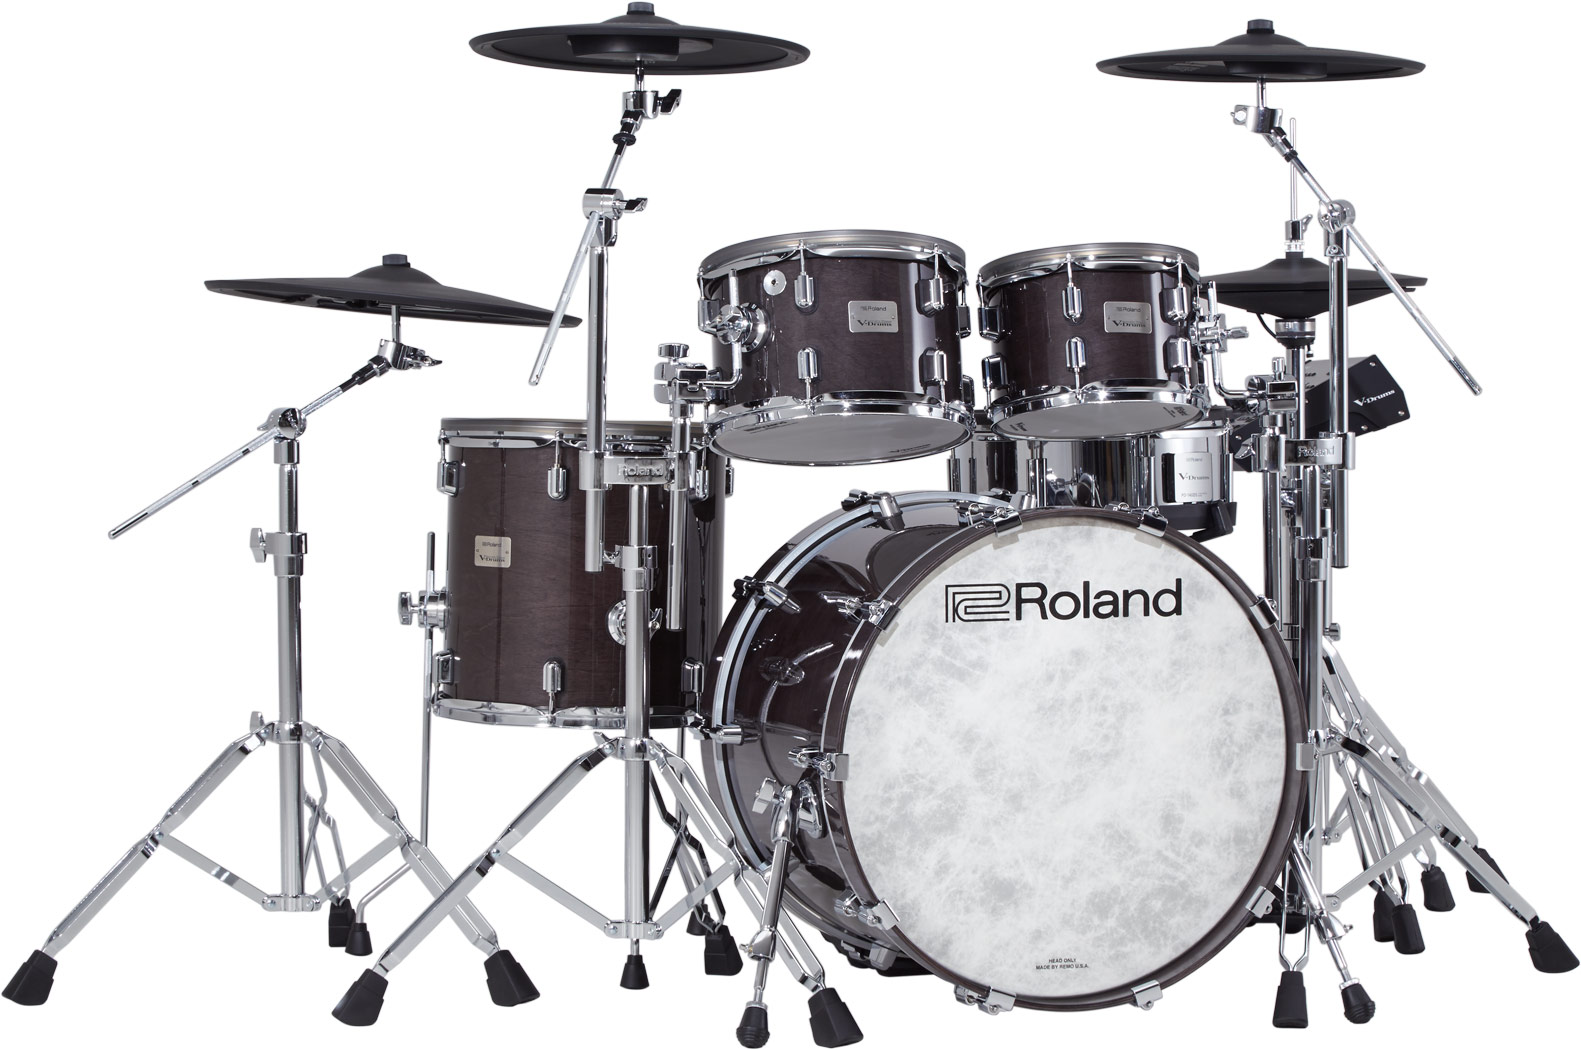 Roland VAD706 drumkit